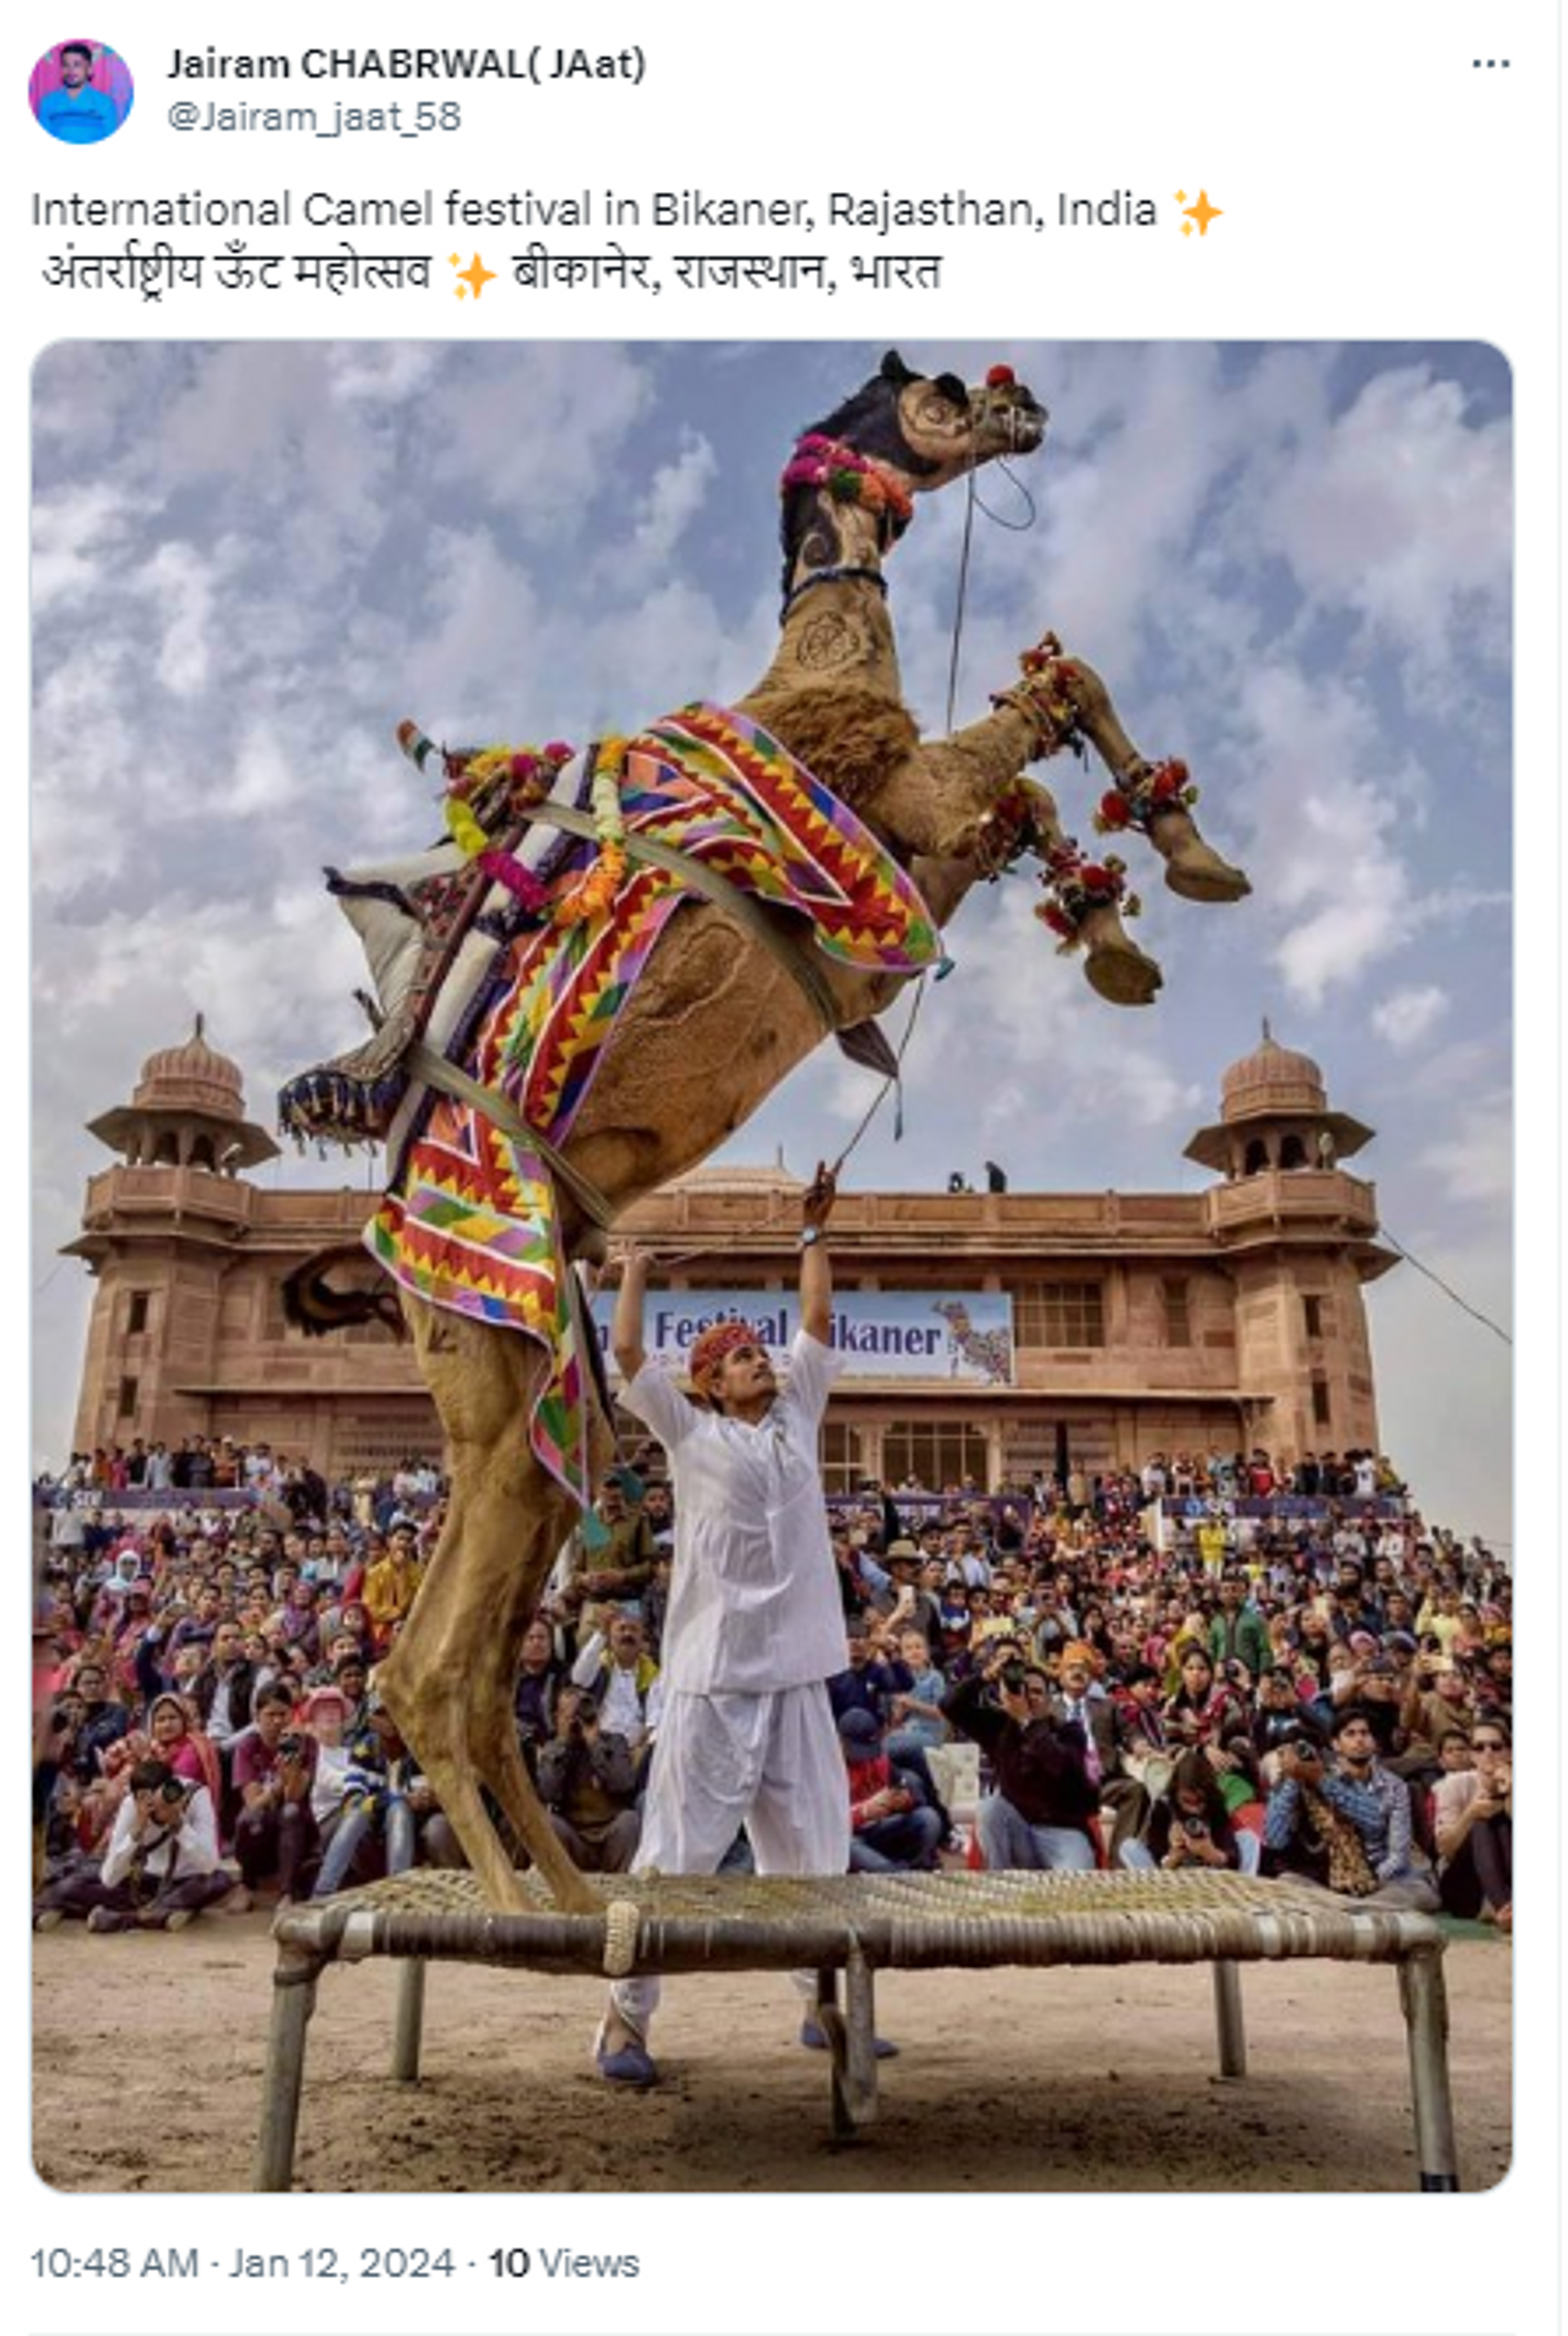 International Camel Festival Kicks Off in Rajasthan's Bikaner - Sputnik India, 1920, 12.01.2024